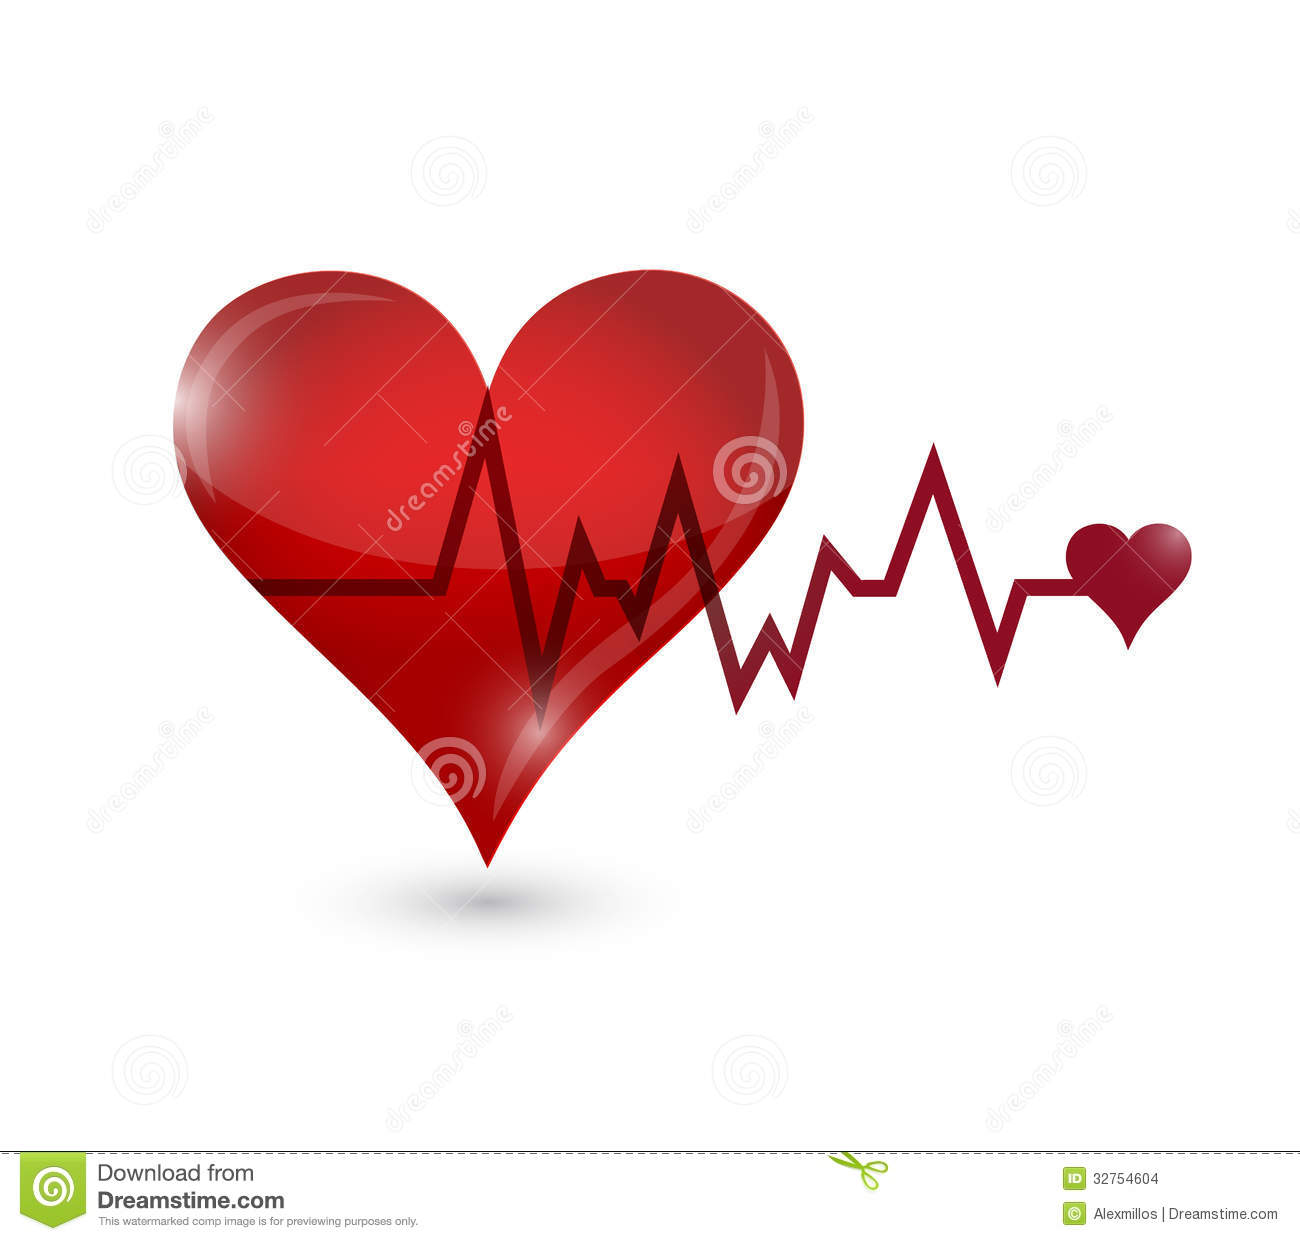 Heart Lifeline Illustration Design Stock Images   Image  32754604